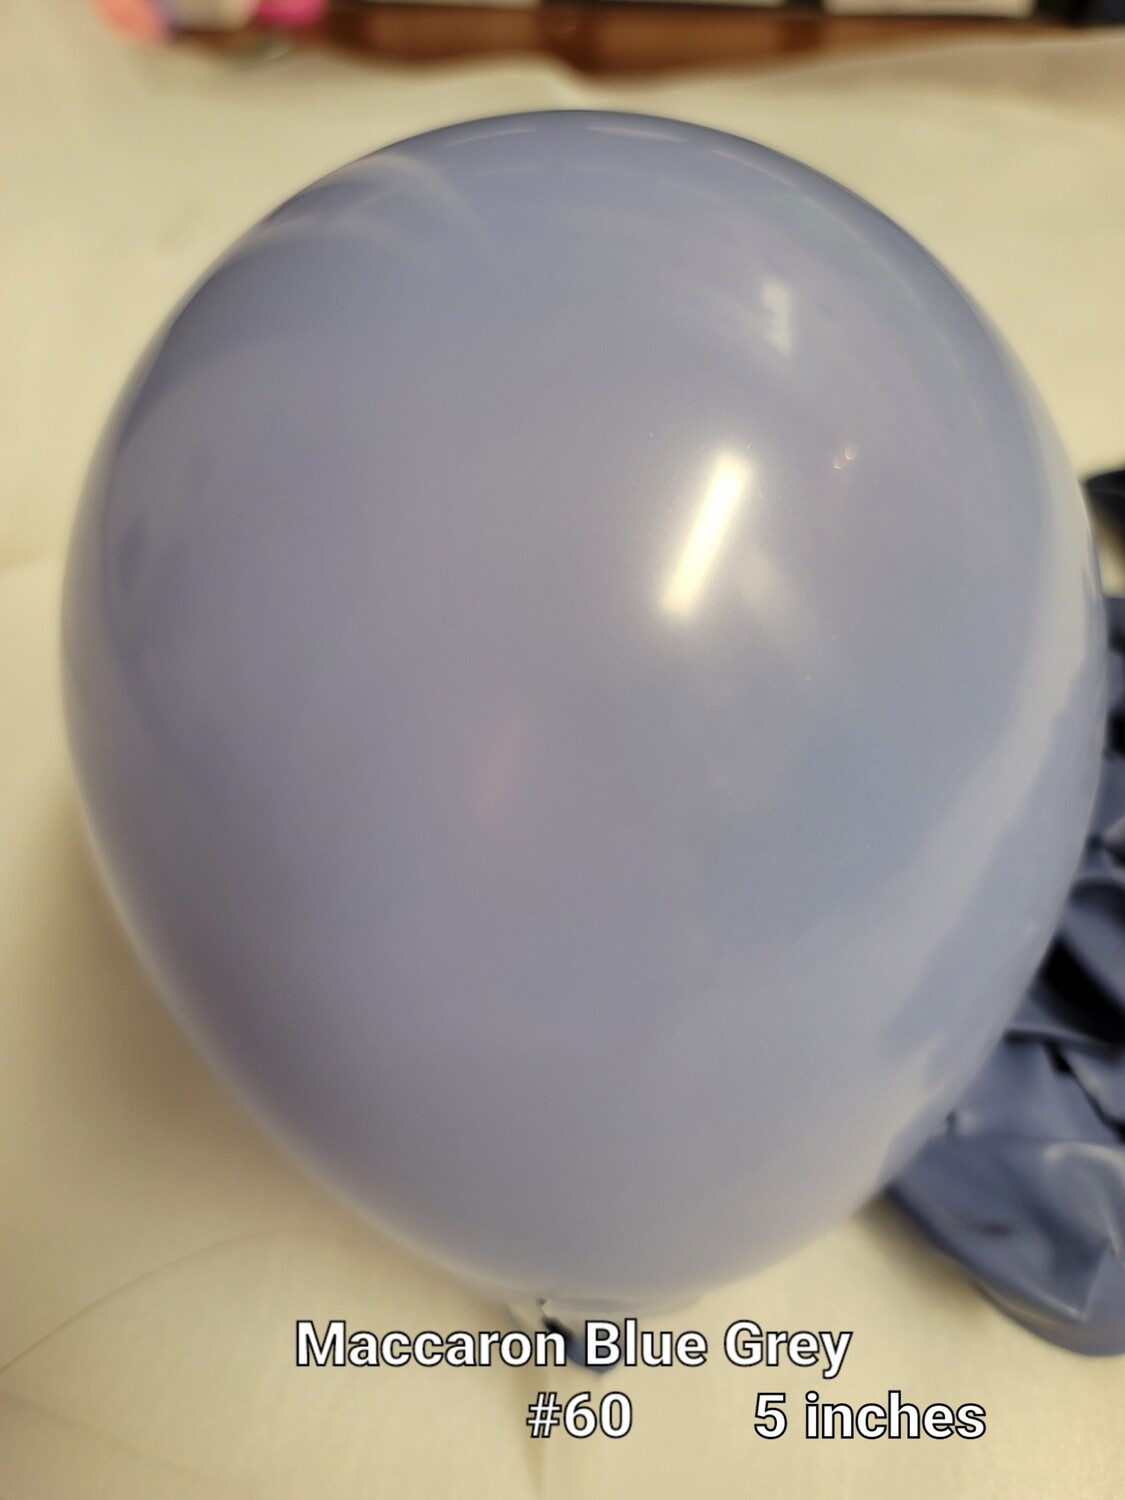 Maccaron Blue Grey balloon